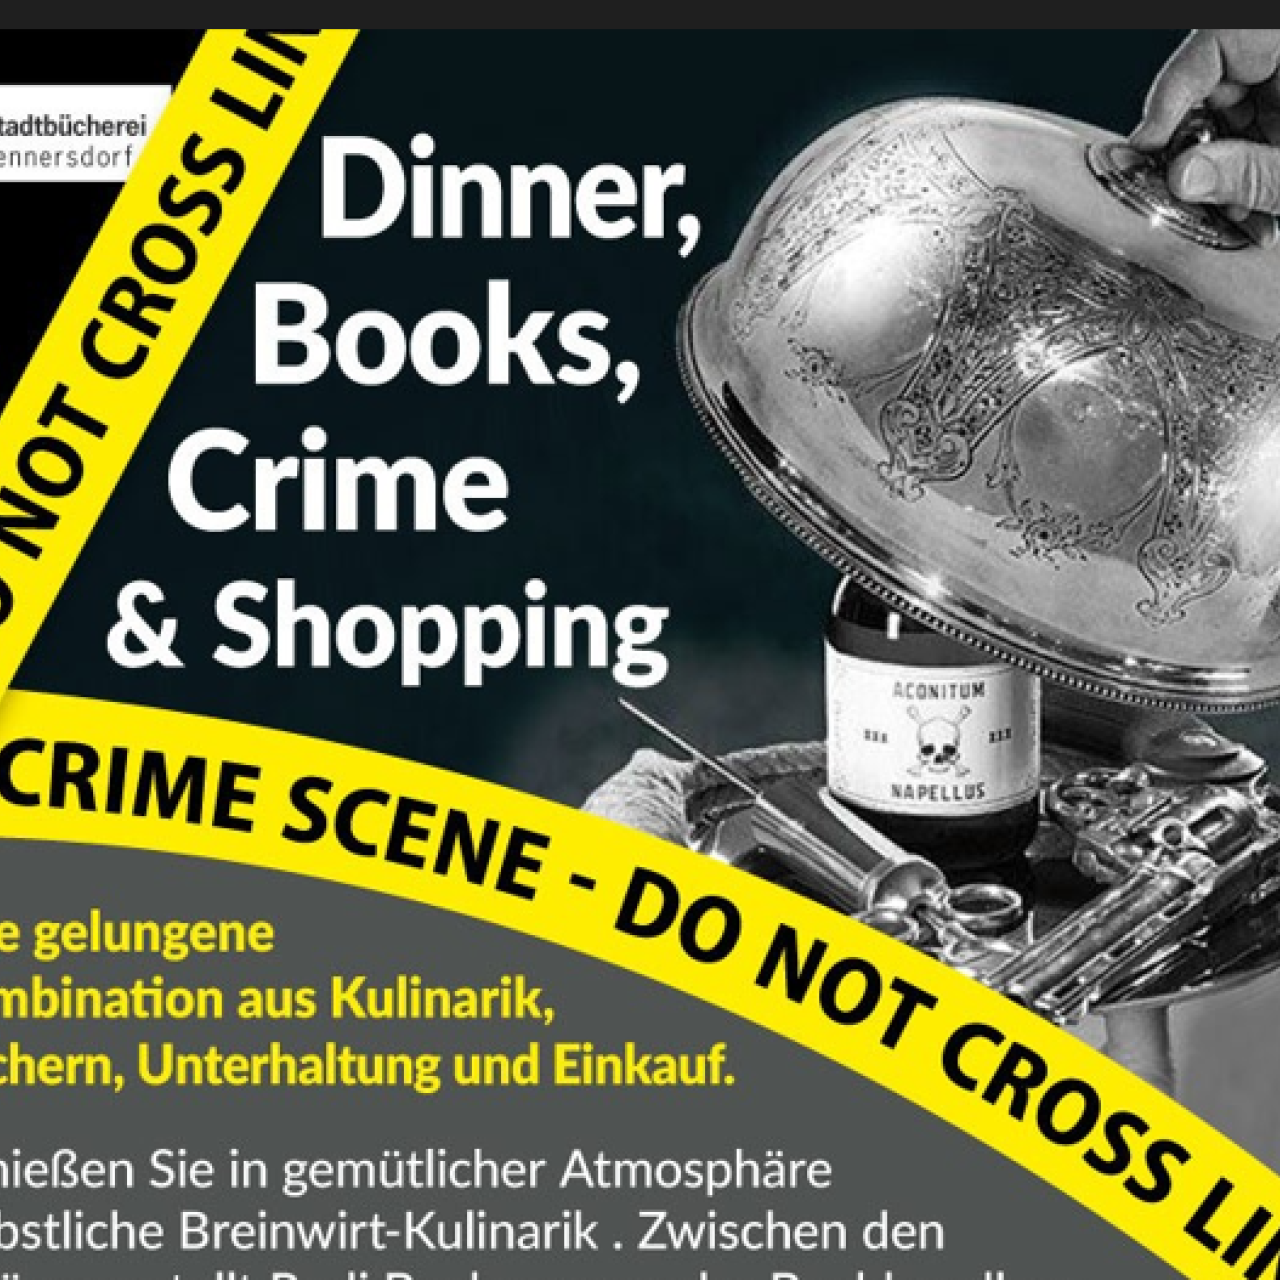 Dinner, Books, Crime and Shopping